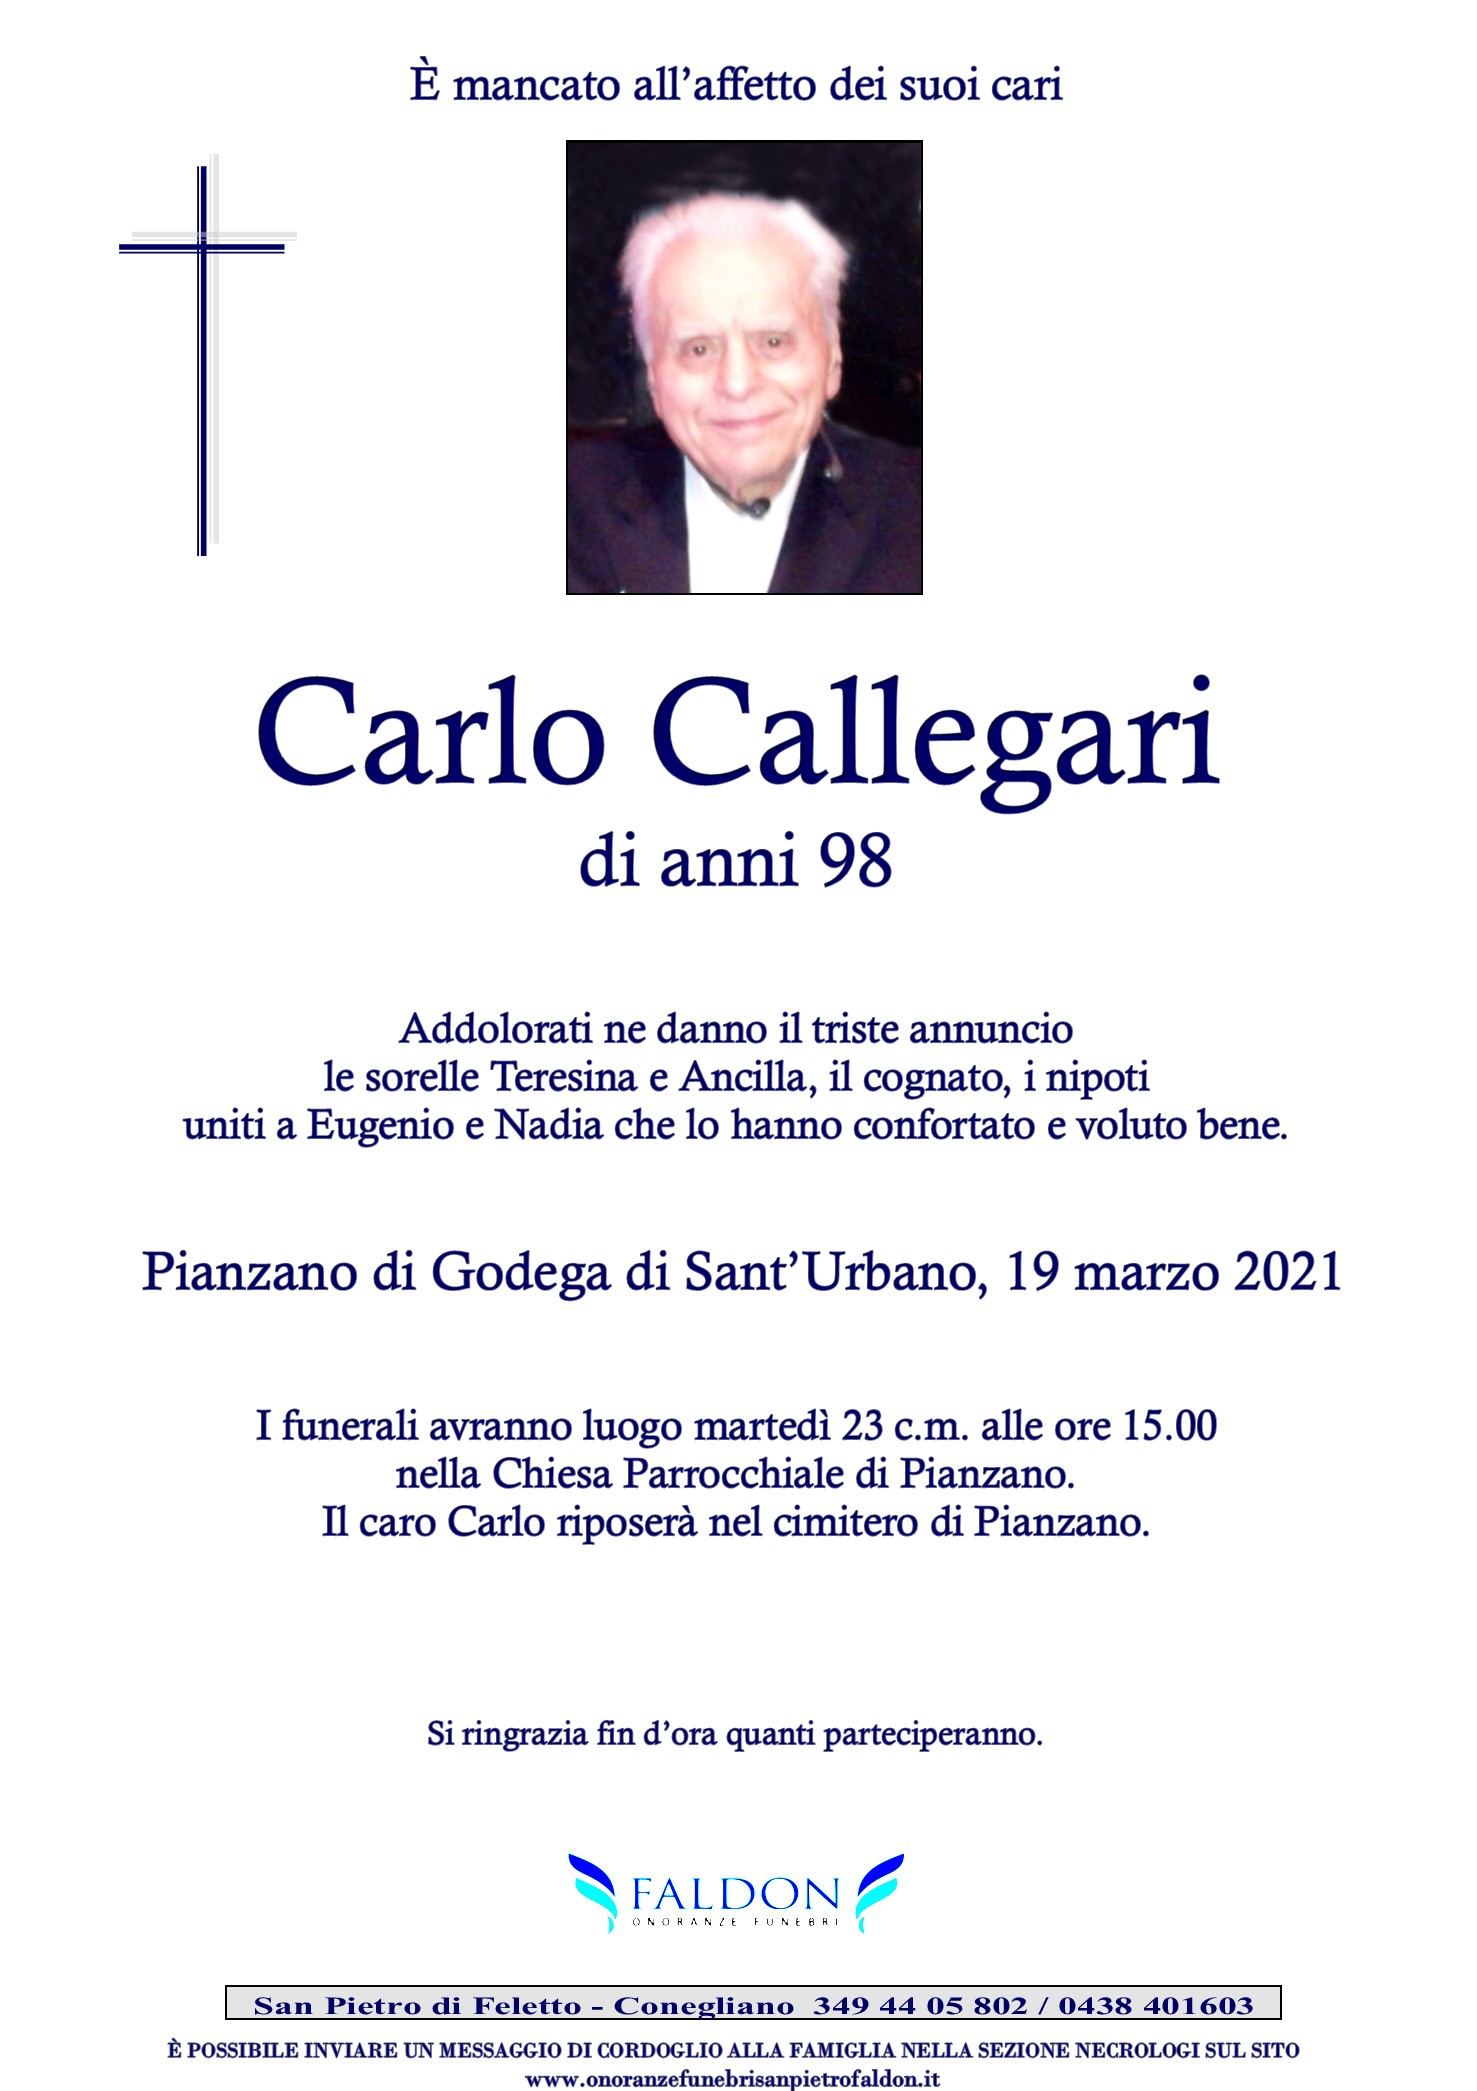 Carlo Callegari